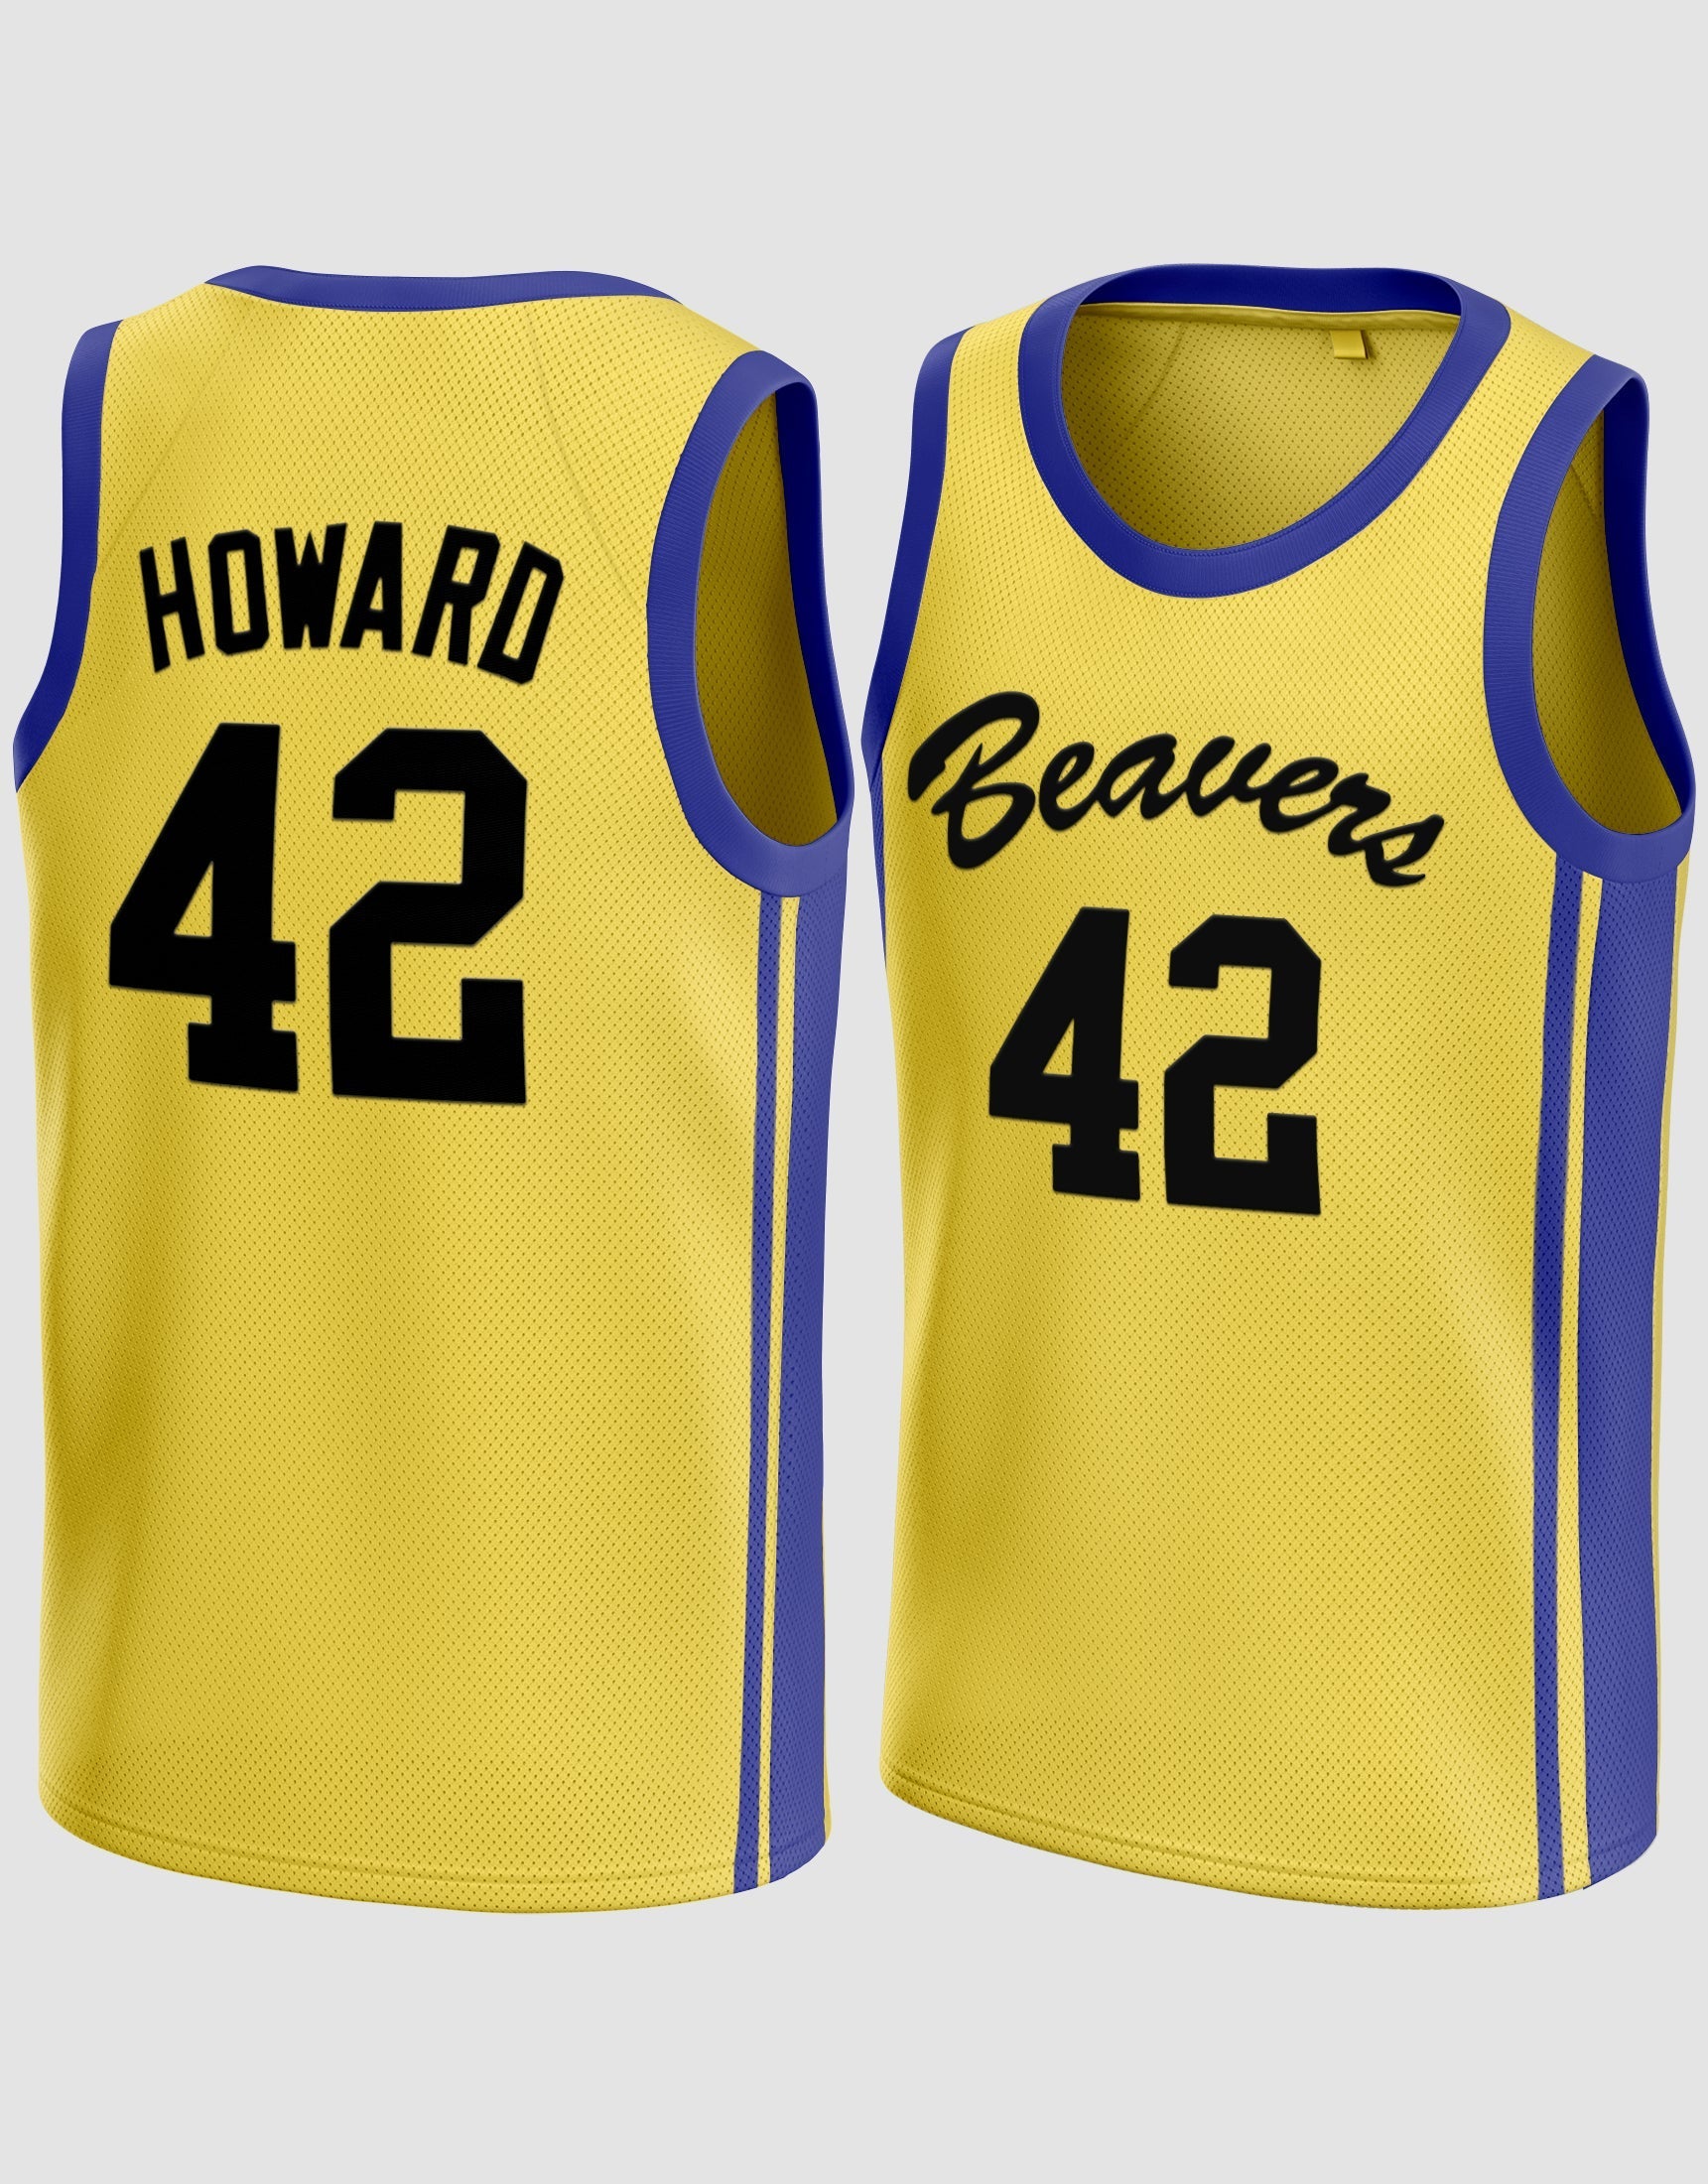 howard jersey number